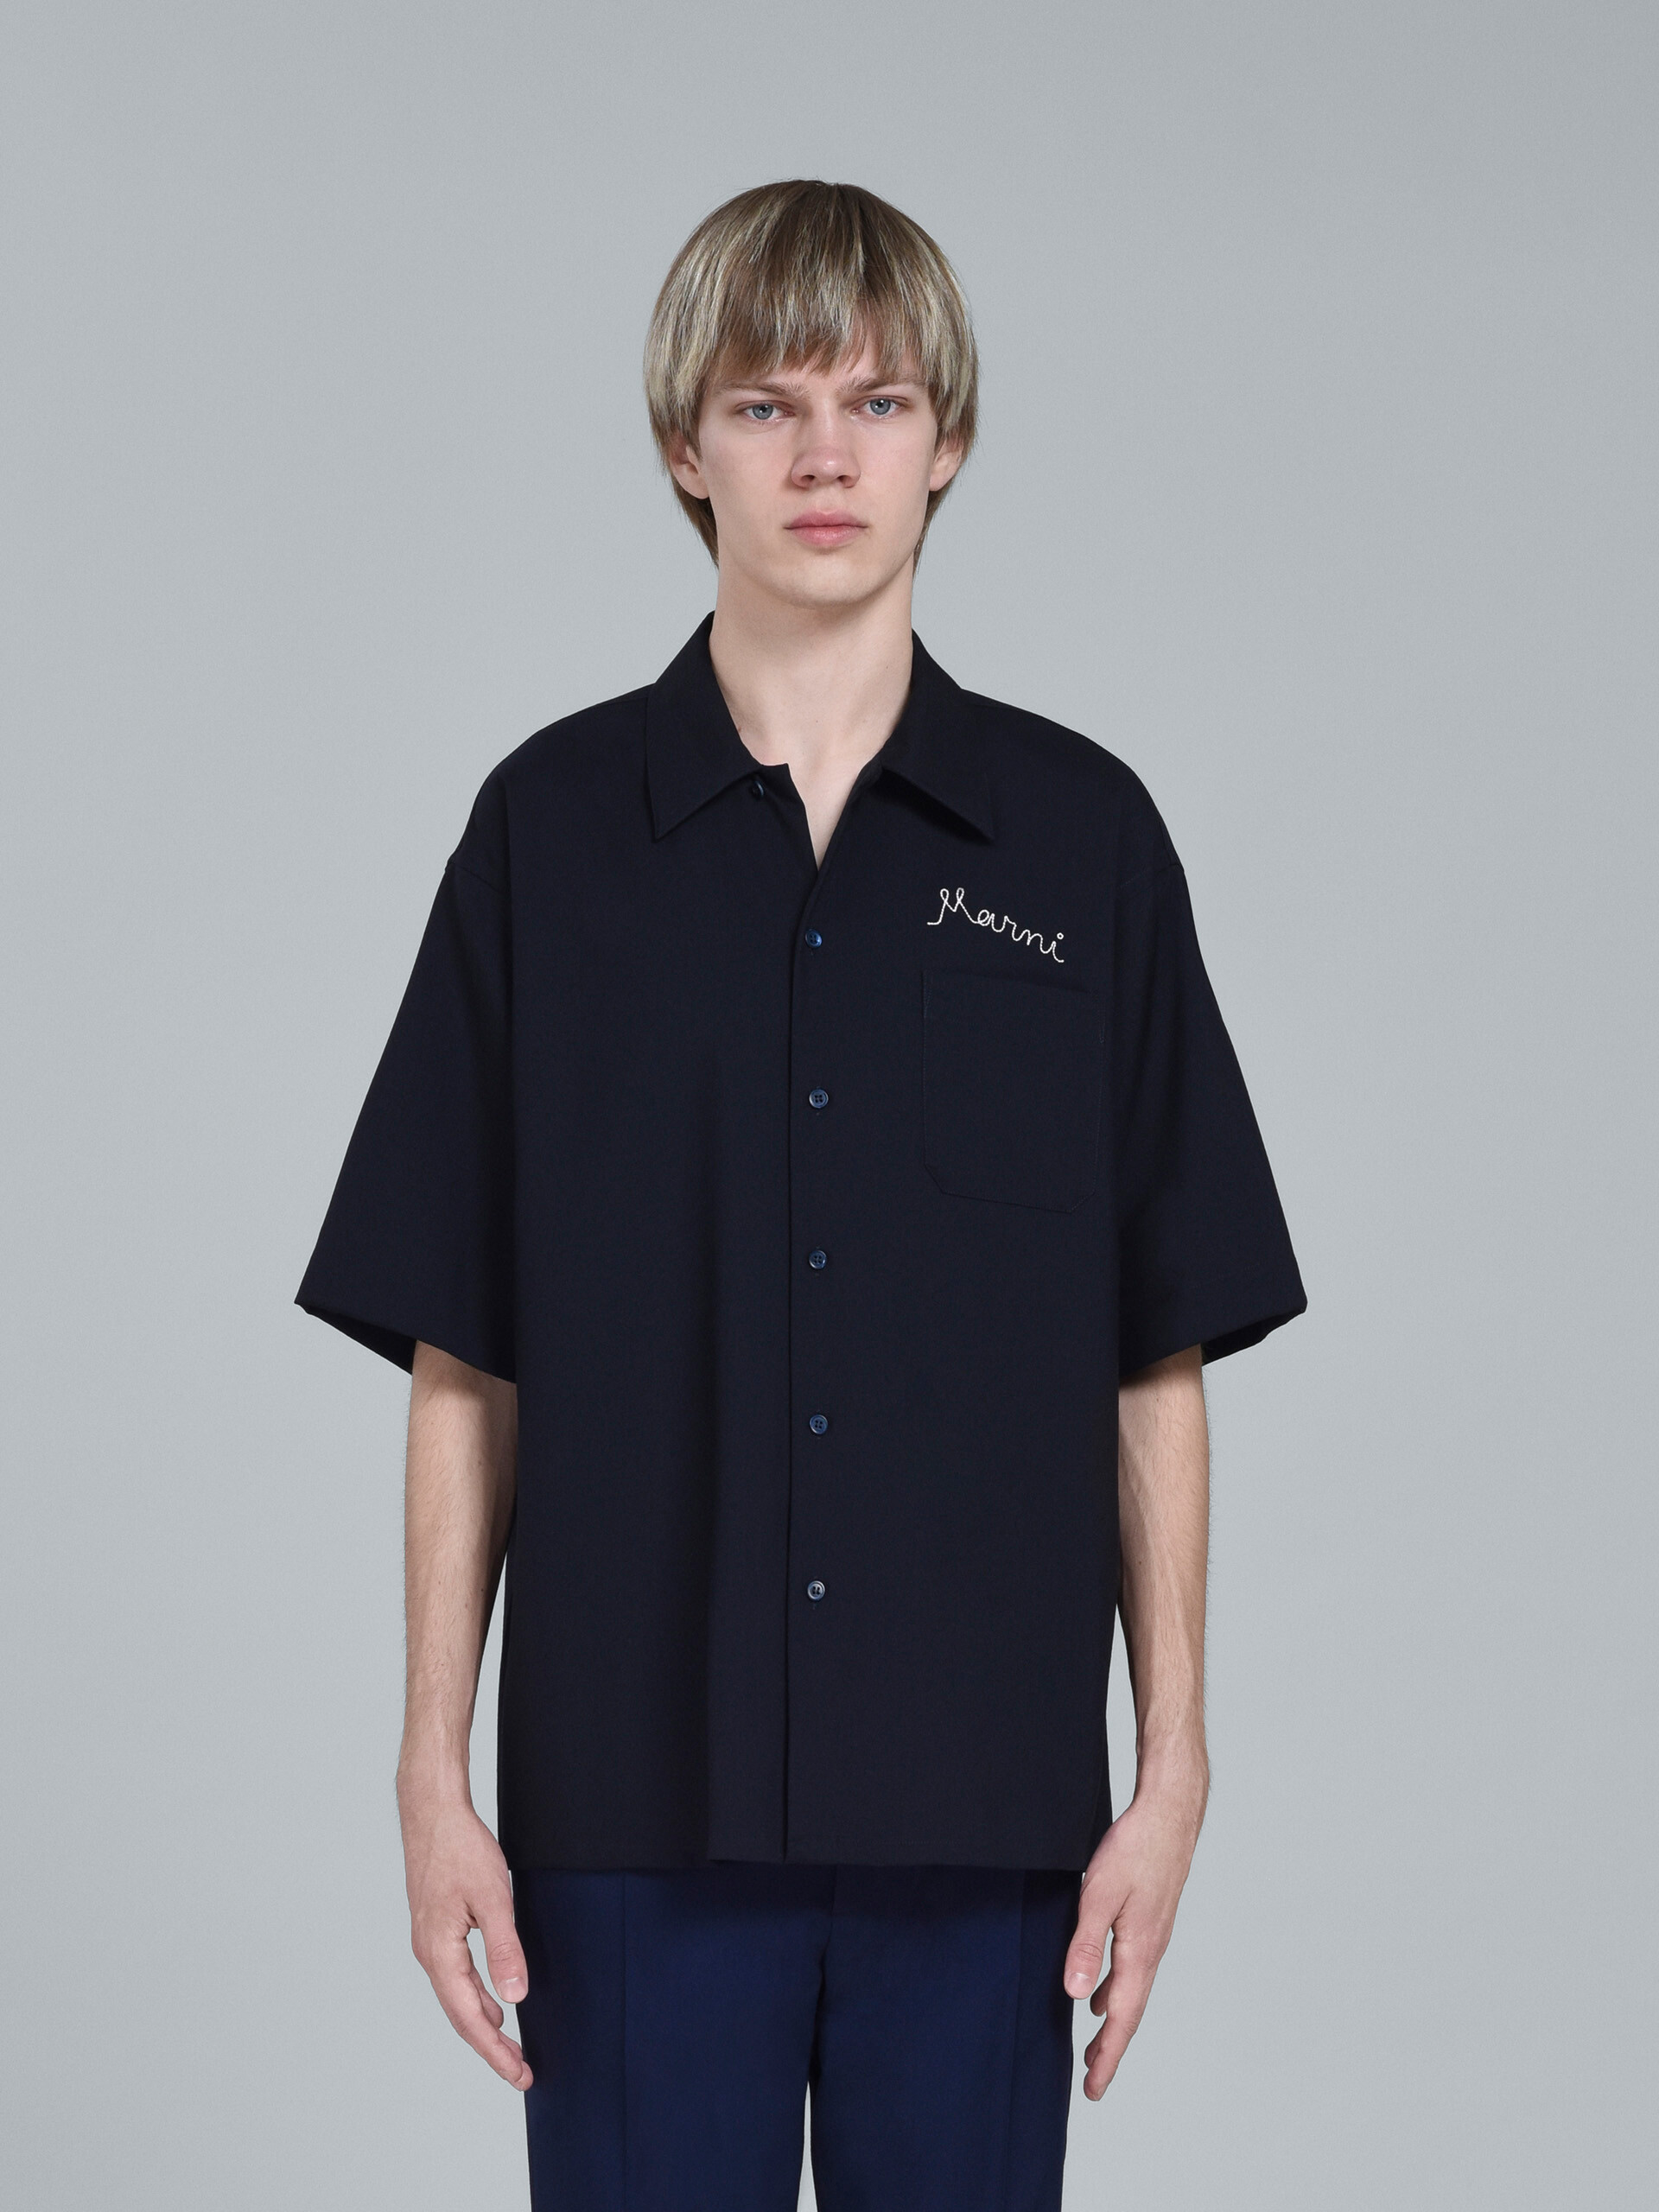 MARNI bowling shirts (black,blue) 44